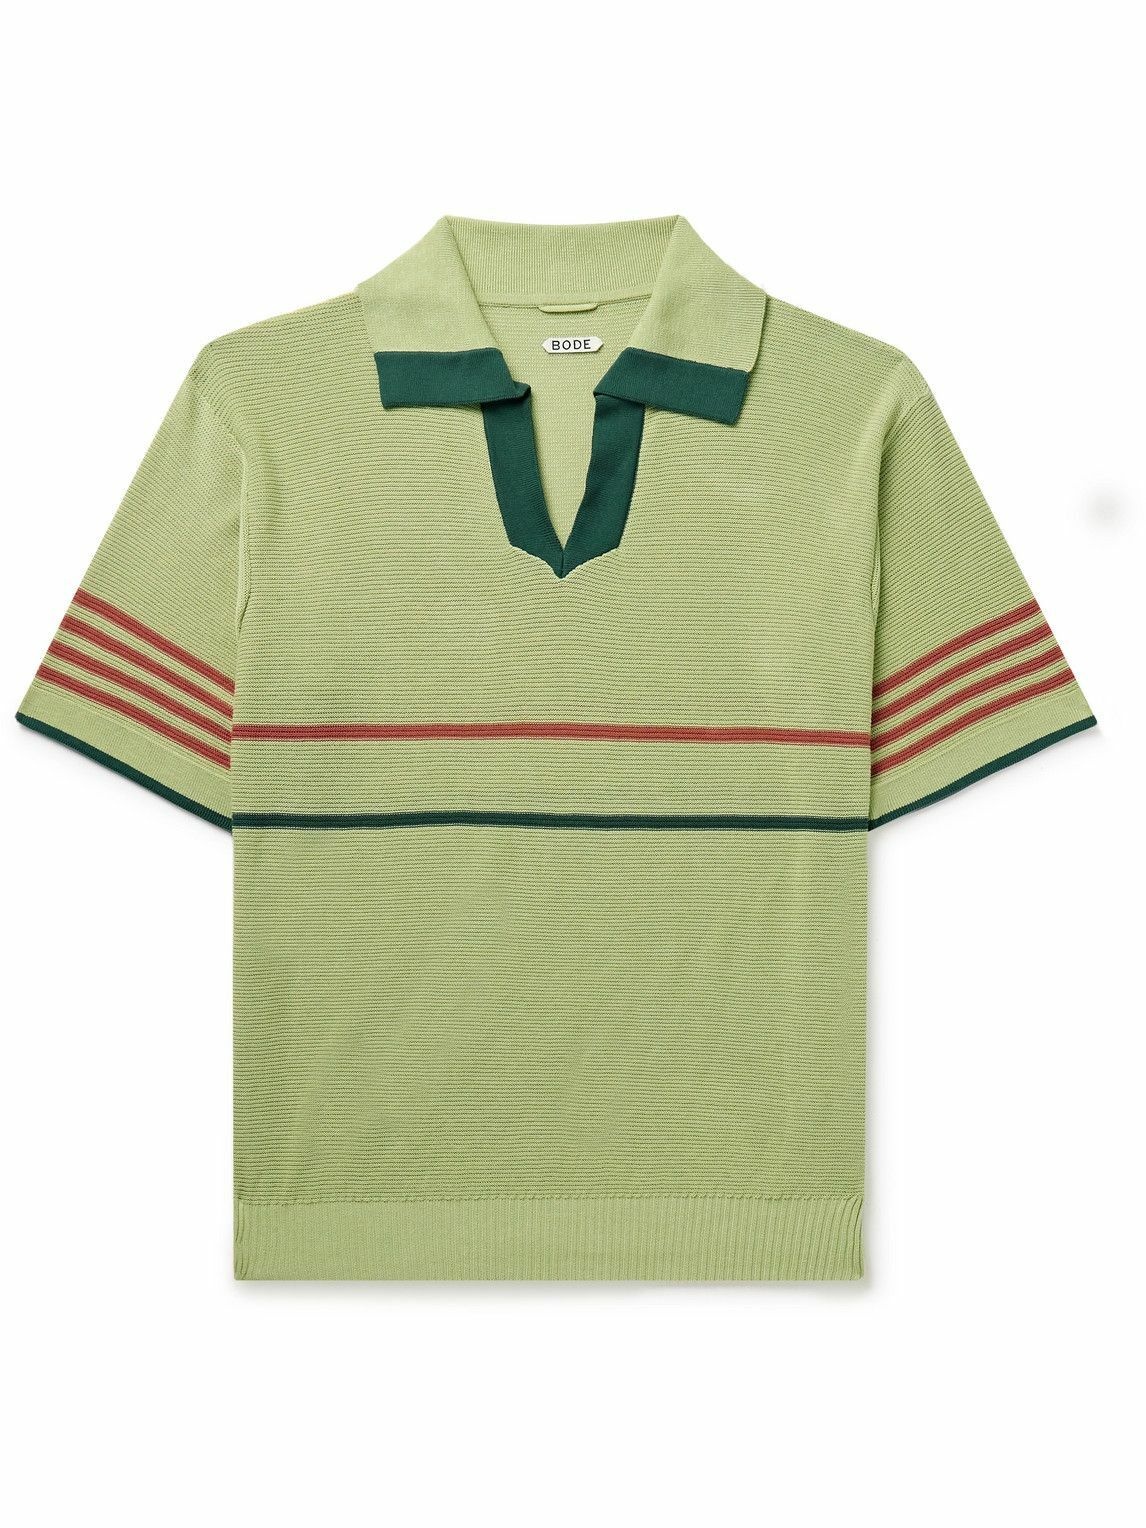 Photo: BODE - Palmer Striped Cotton Polo Shirt - Green